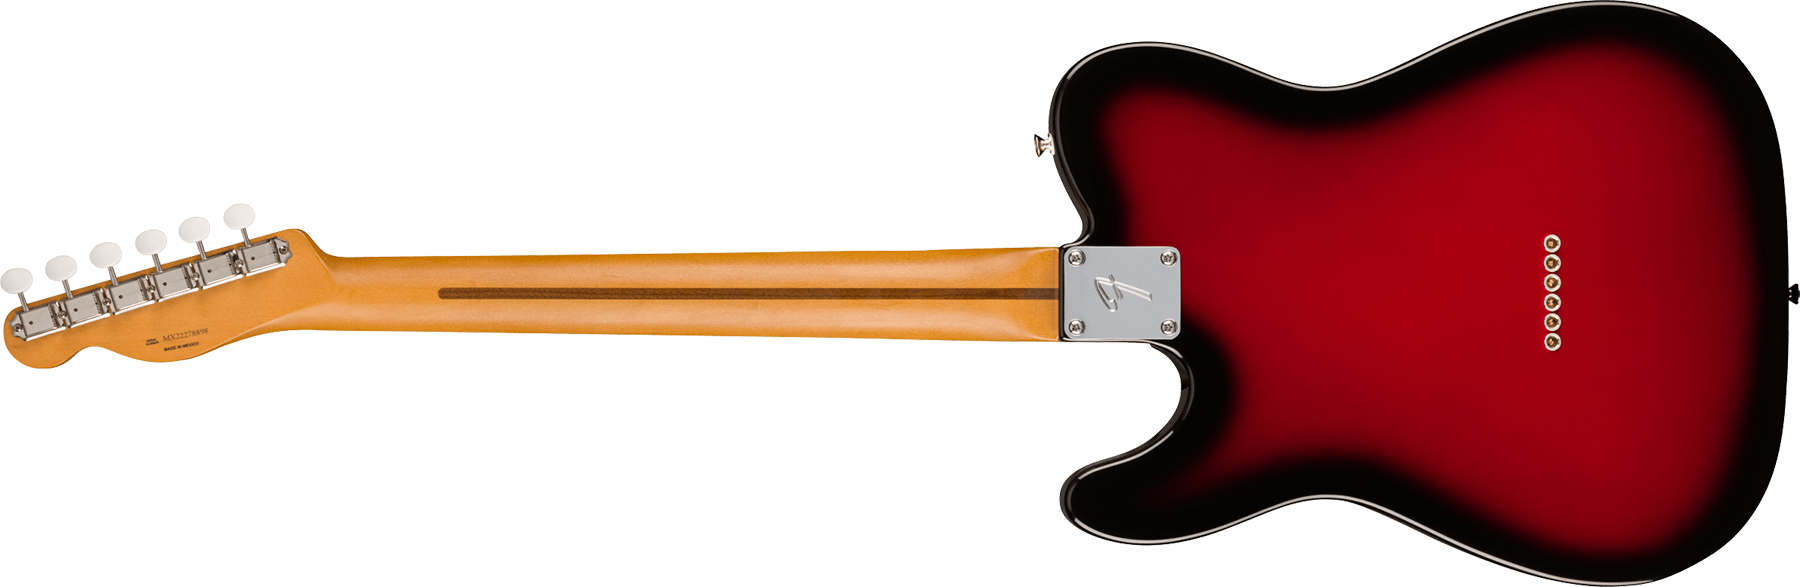 Fender Tele Gold Foil Ltd Mex 2mh Ht Eb - Candy Apple Burst - Tel shape electric guitar - Variation 1